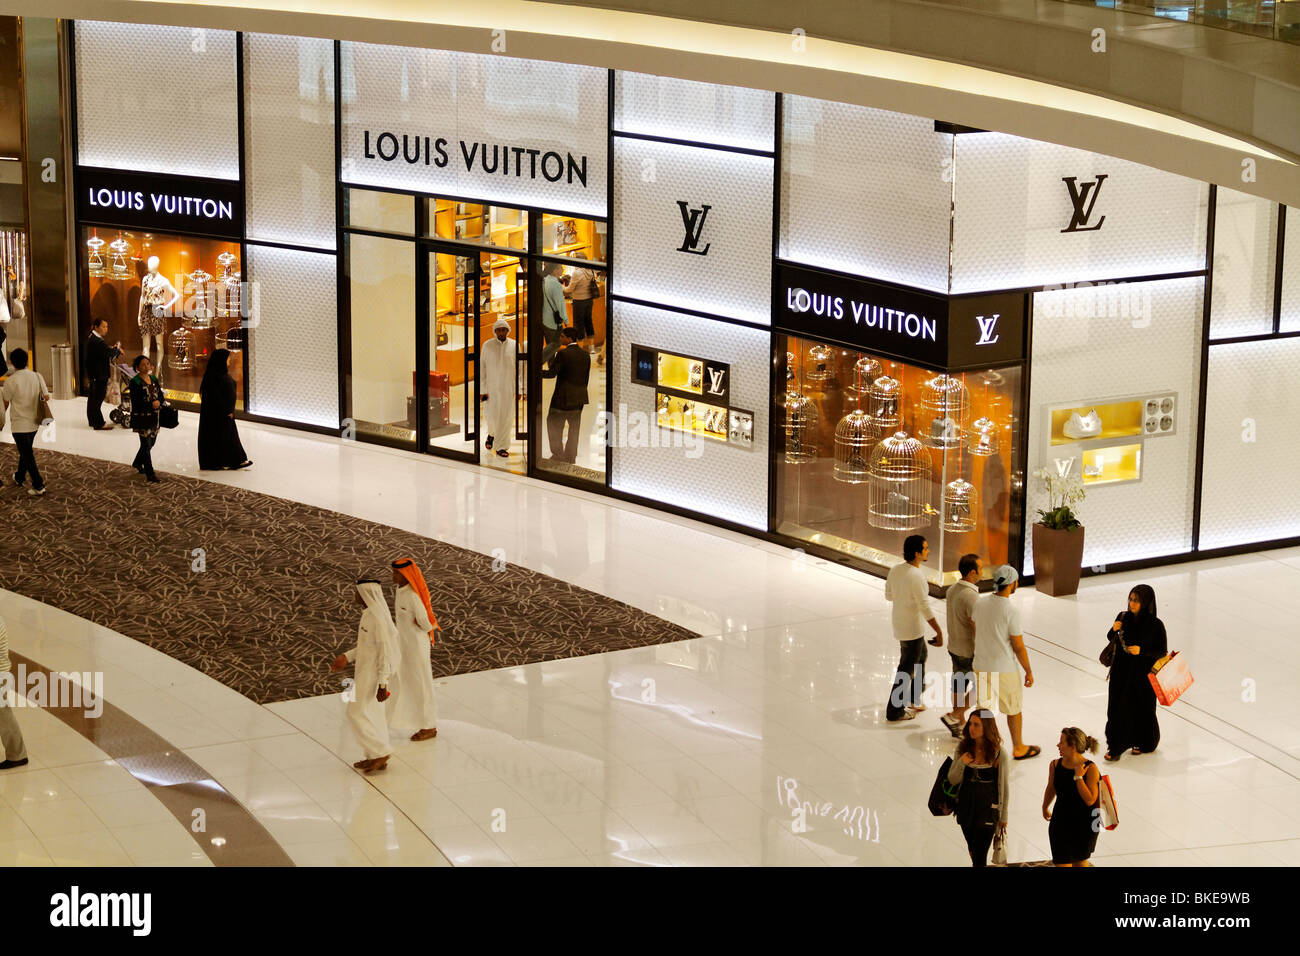 Dubai Shopping Mall Louis Vuitton Shop United Arab Emirates City Stock Photo, Royalty Free Image ...